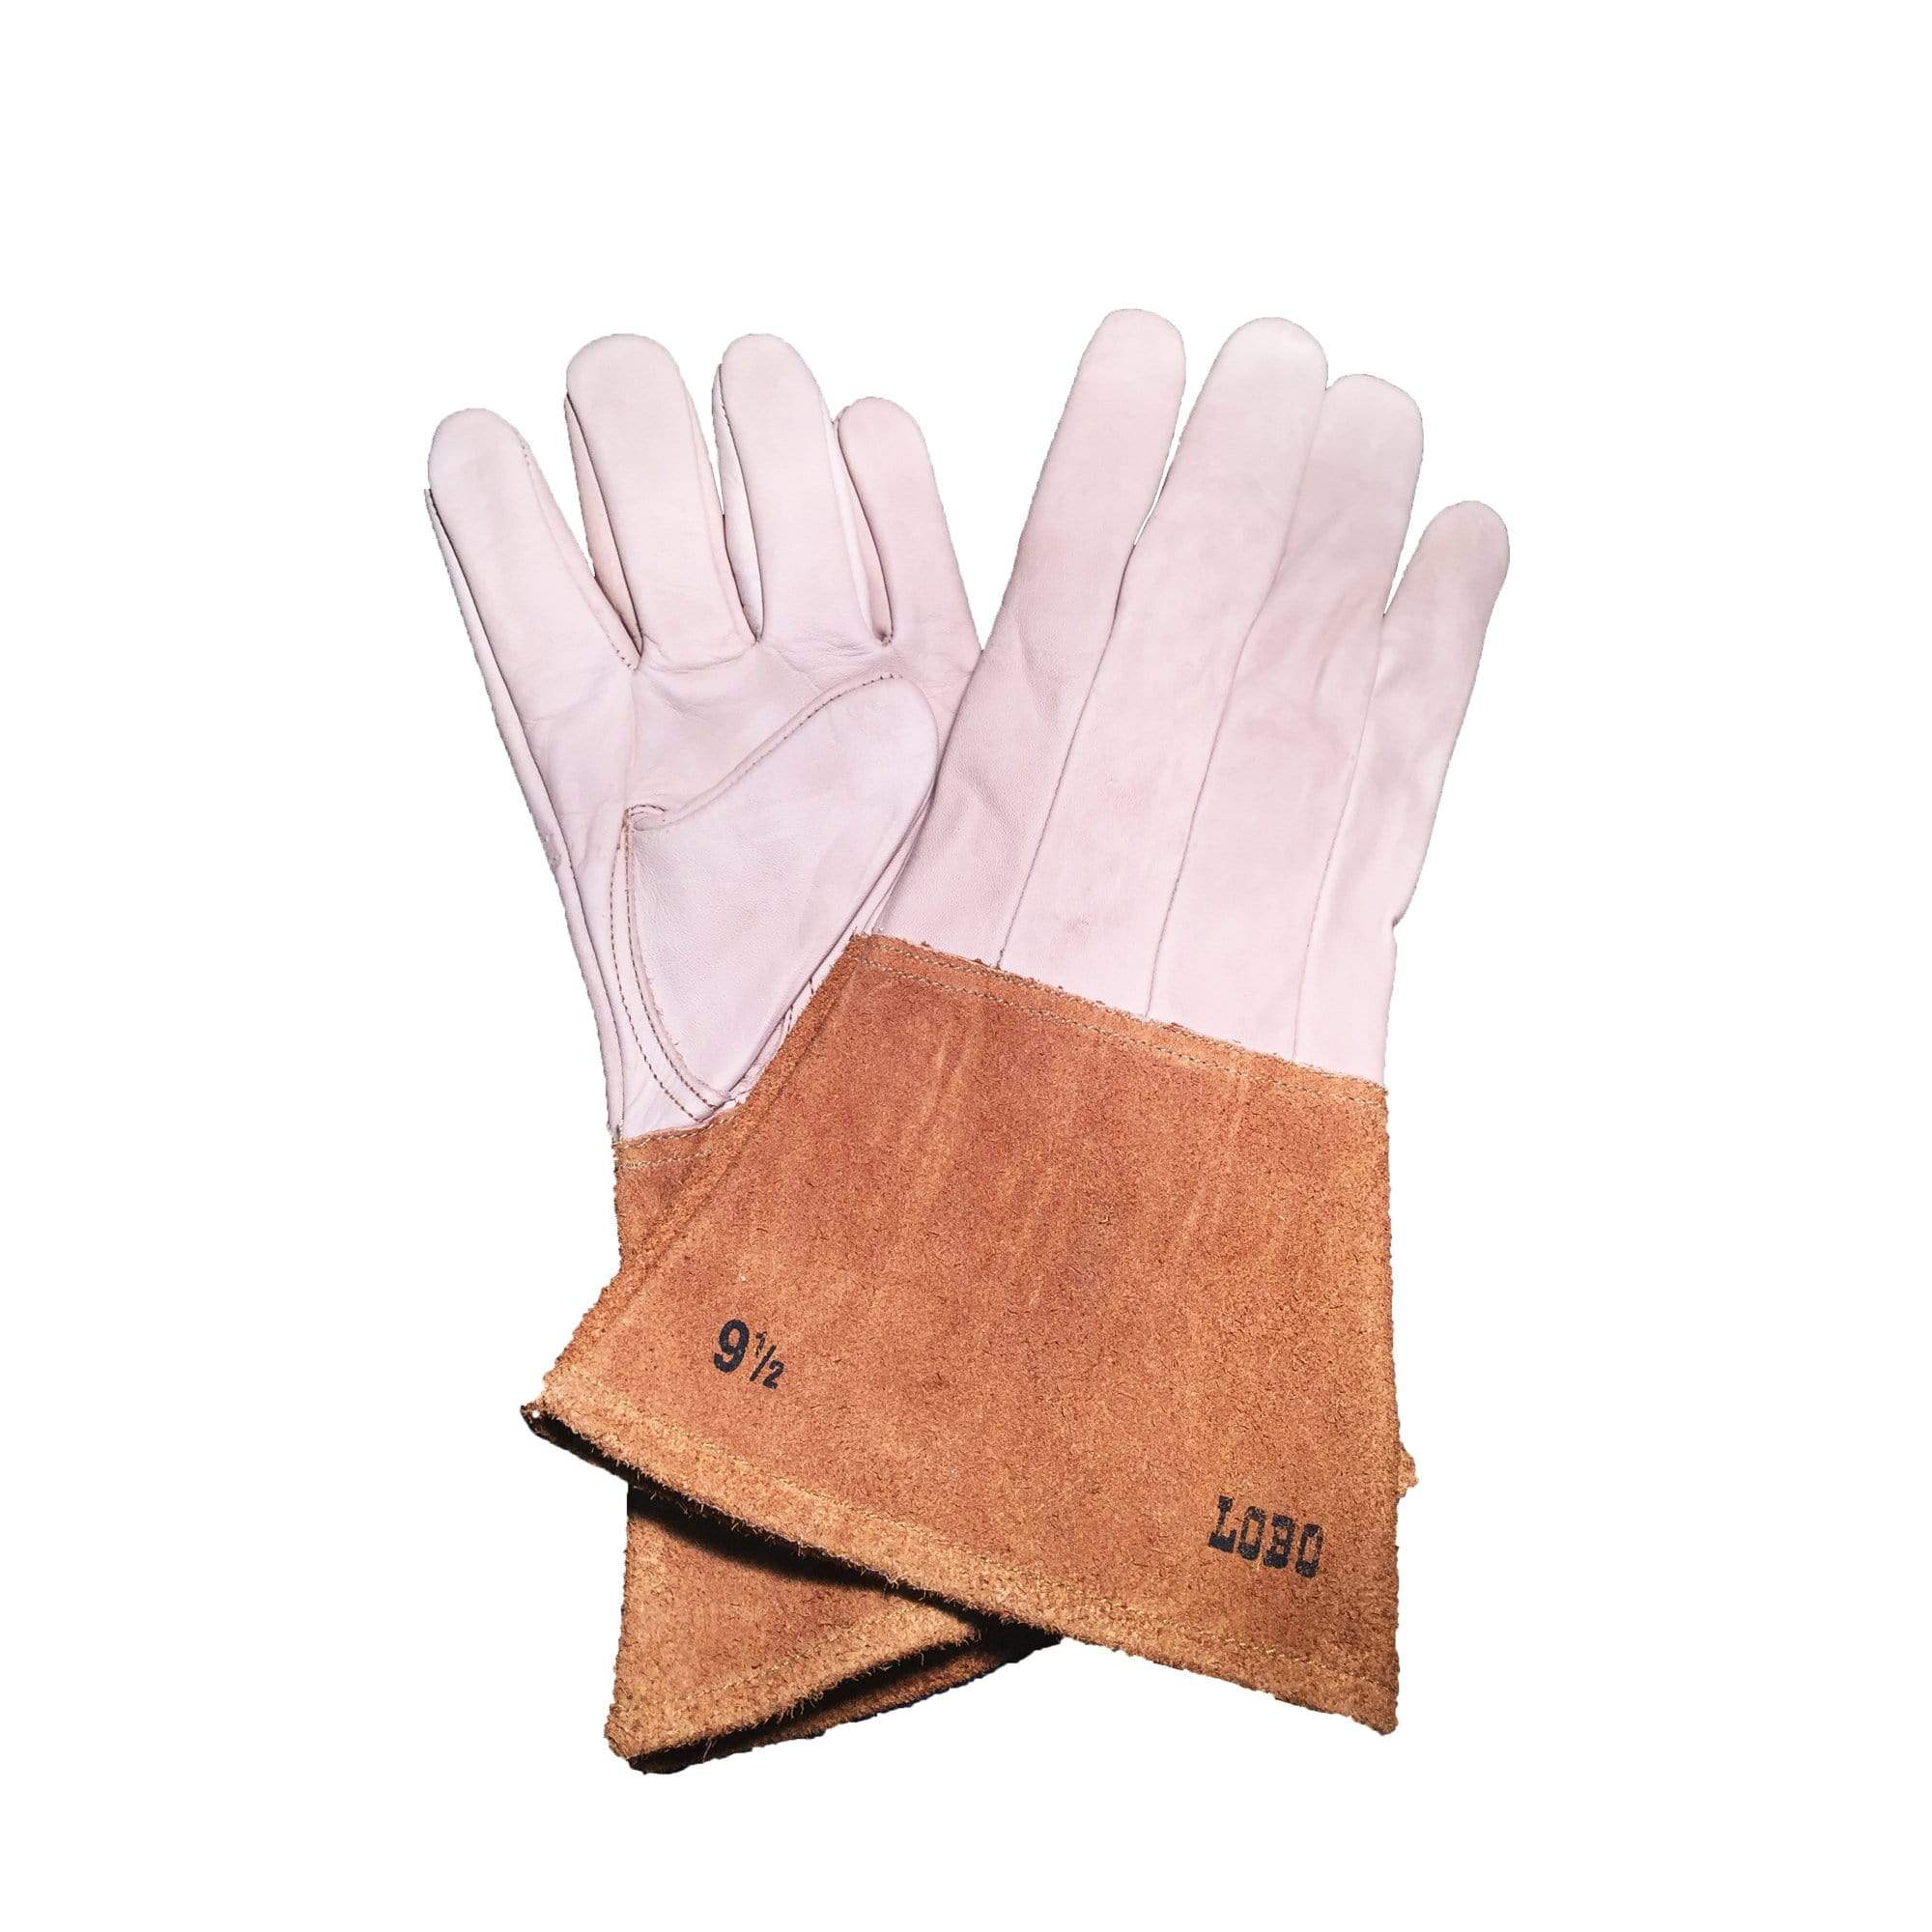 lobo lemon picking gloves - thorn proof -thornproof - thorn resistant - puncture resistant - Gardening Gloves